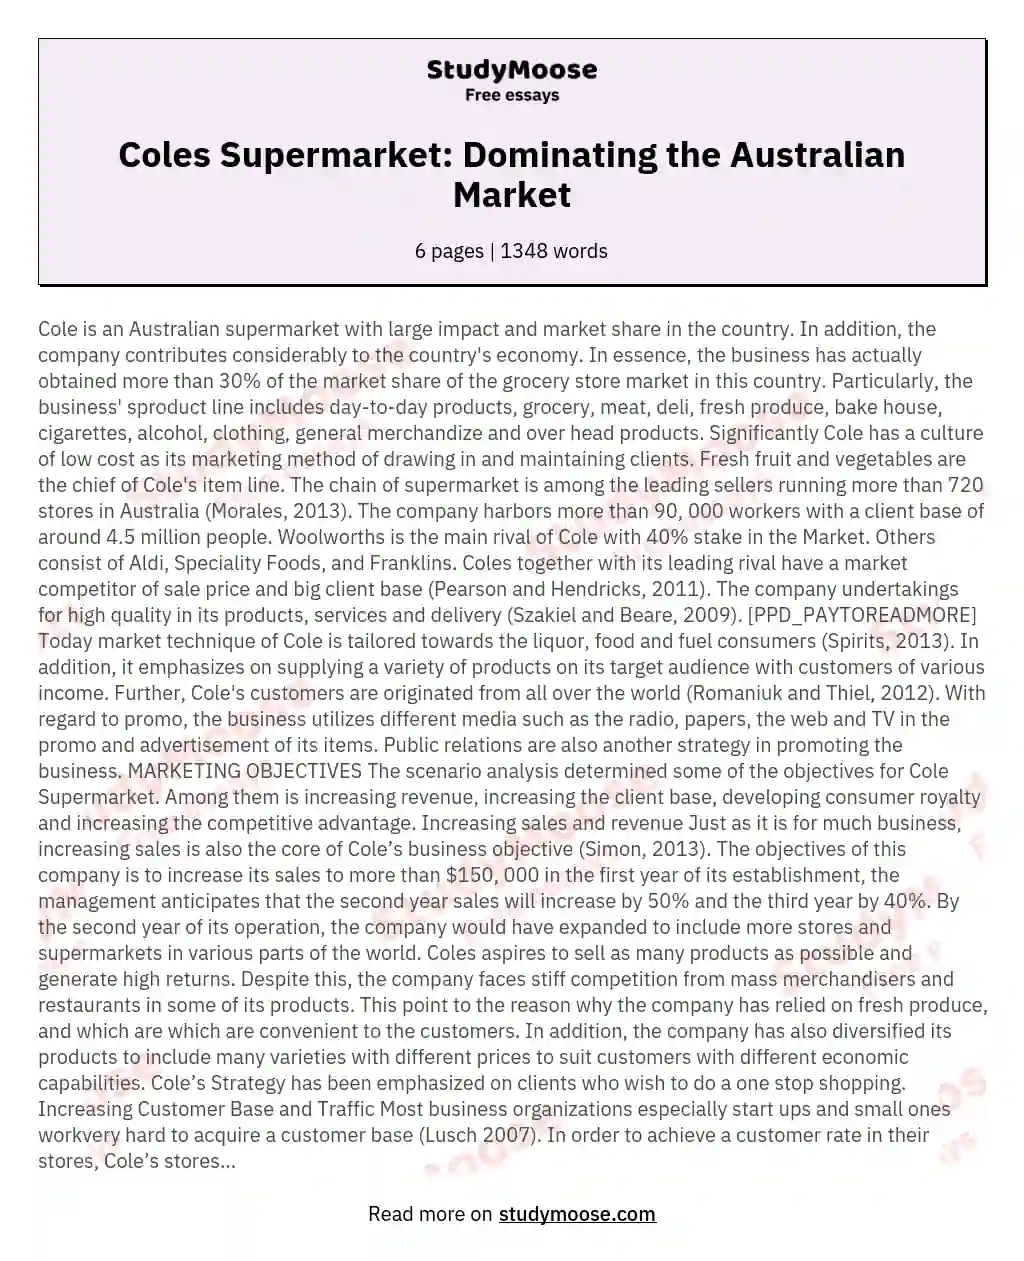 Coles Supermarket: Dominating the Australian Market essay